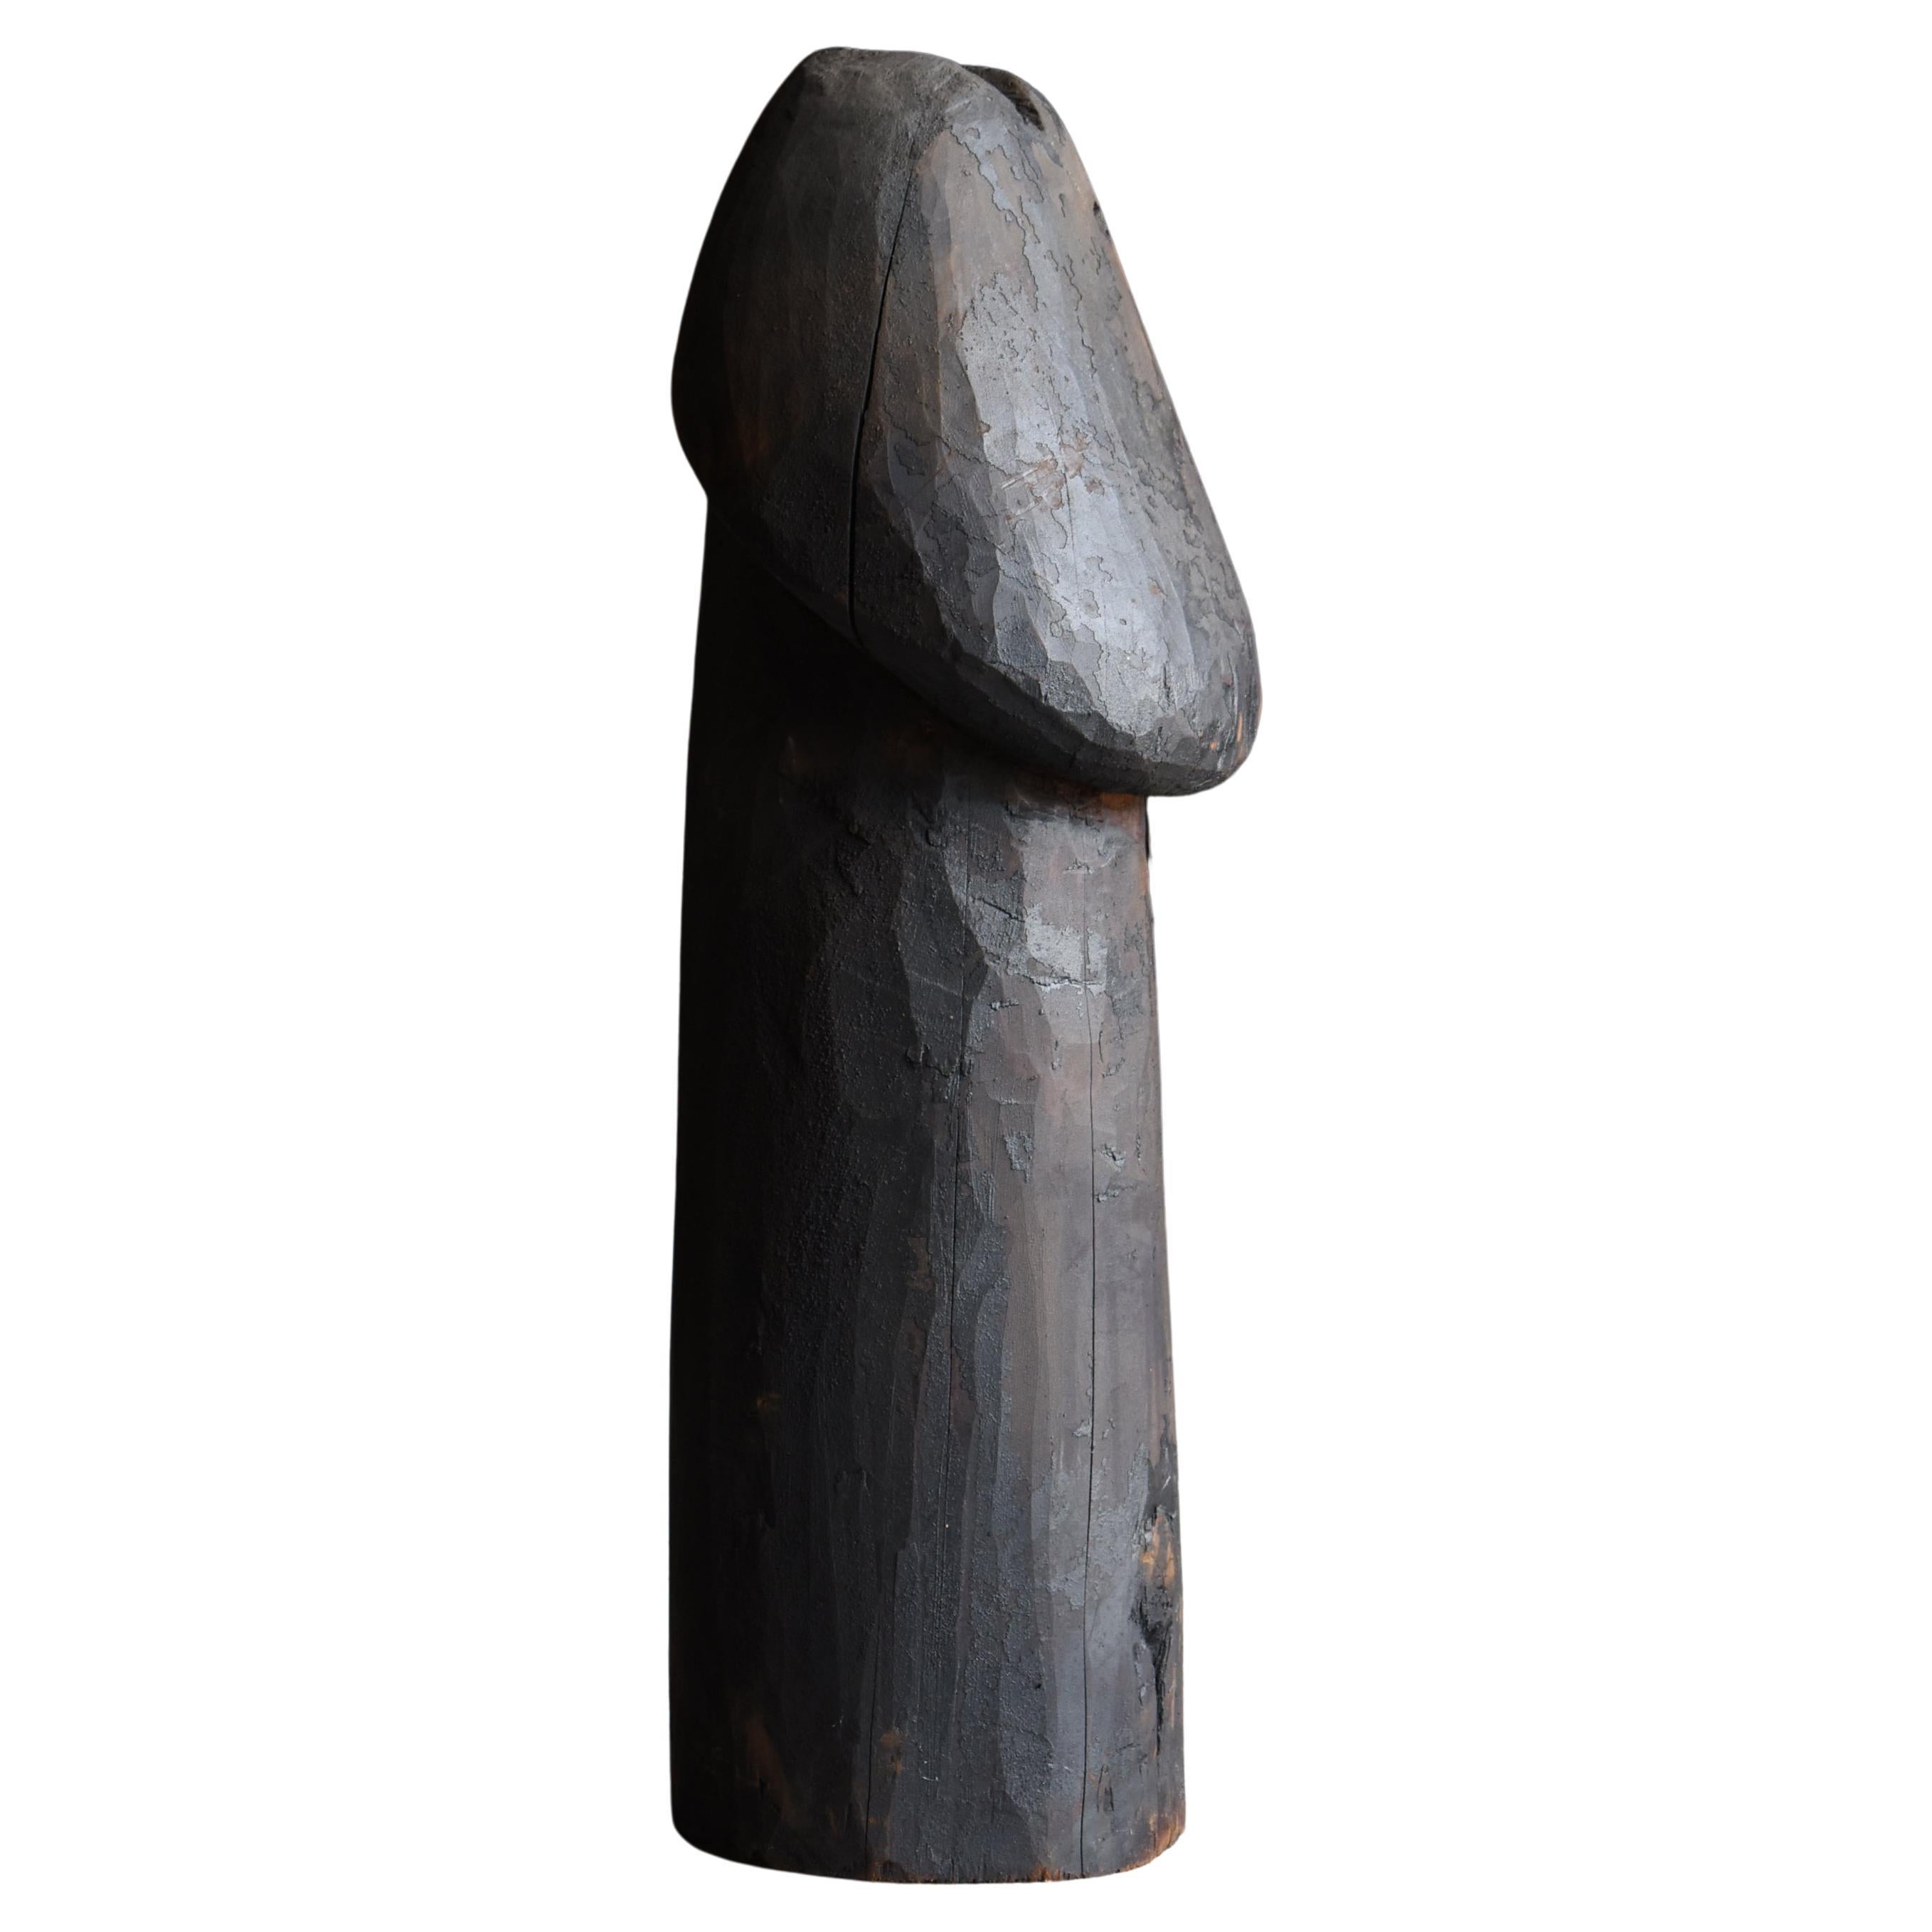 Japanese Antique Wood Carving Huge Penis 1700s-1800s / Figurine Object Wabi Sabi